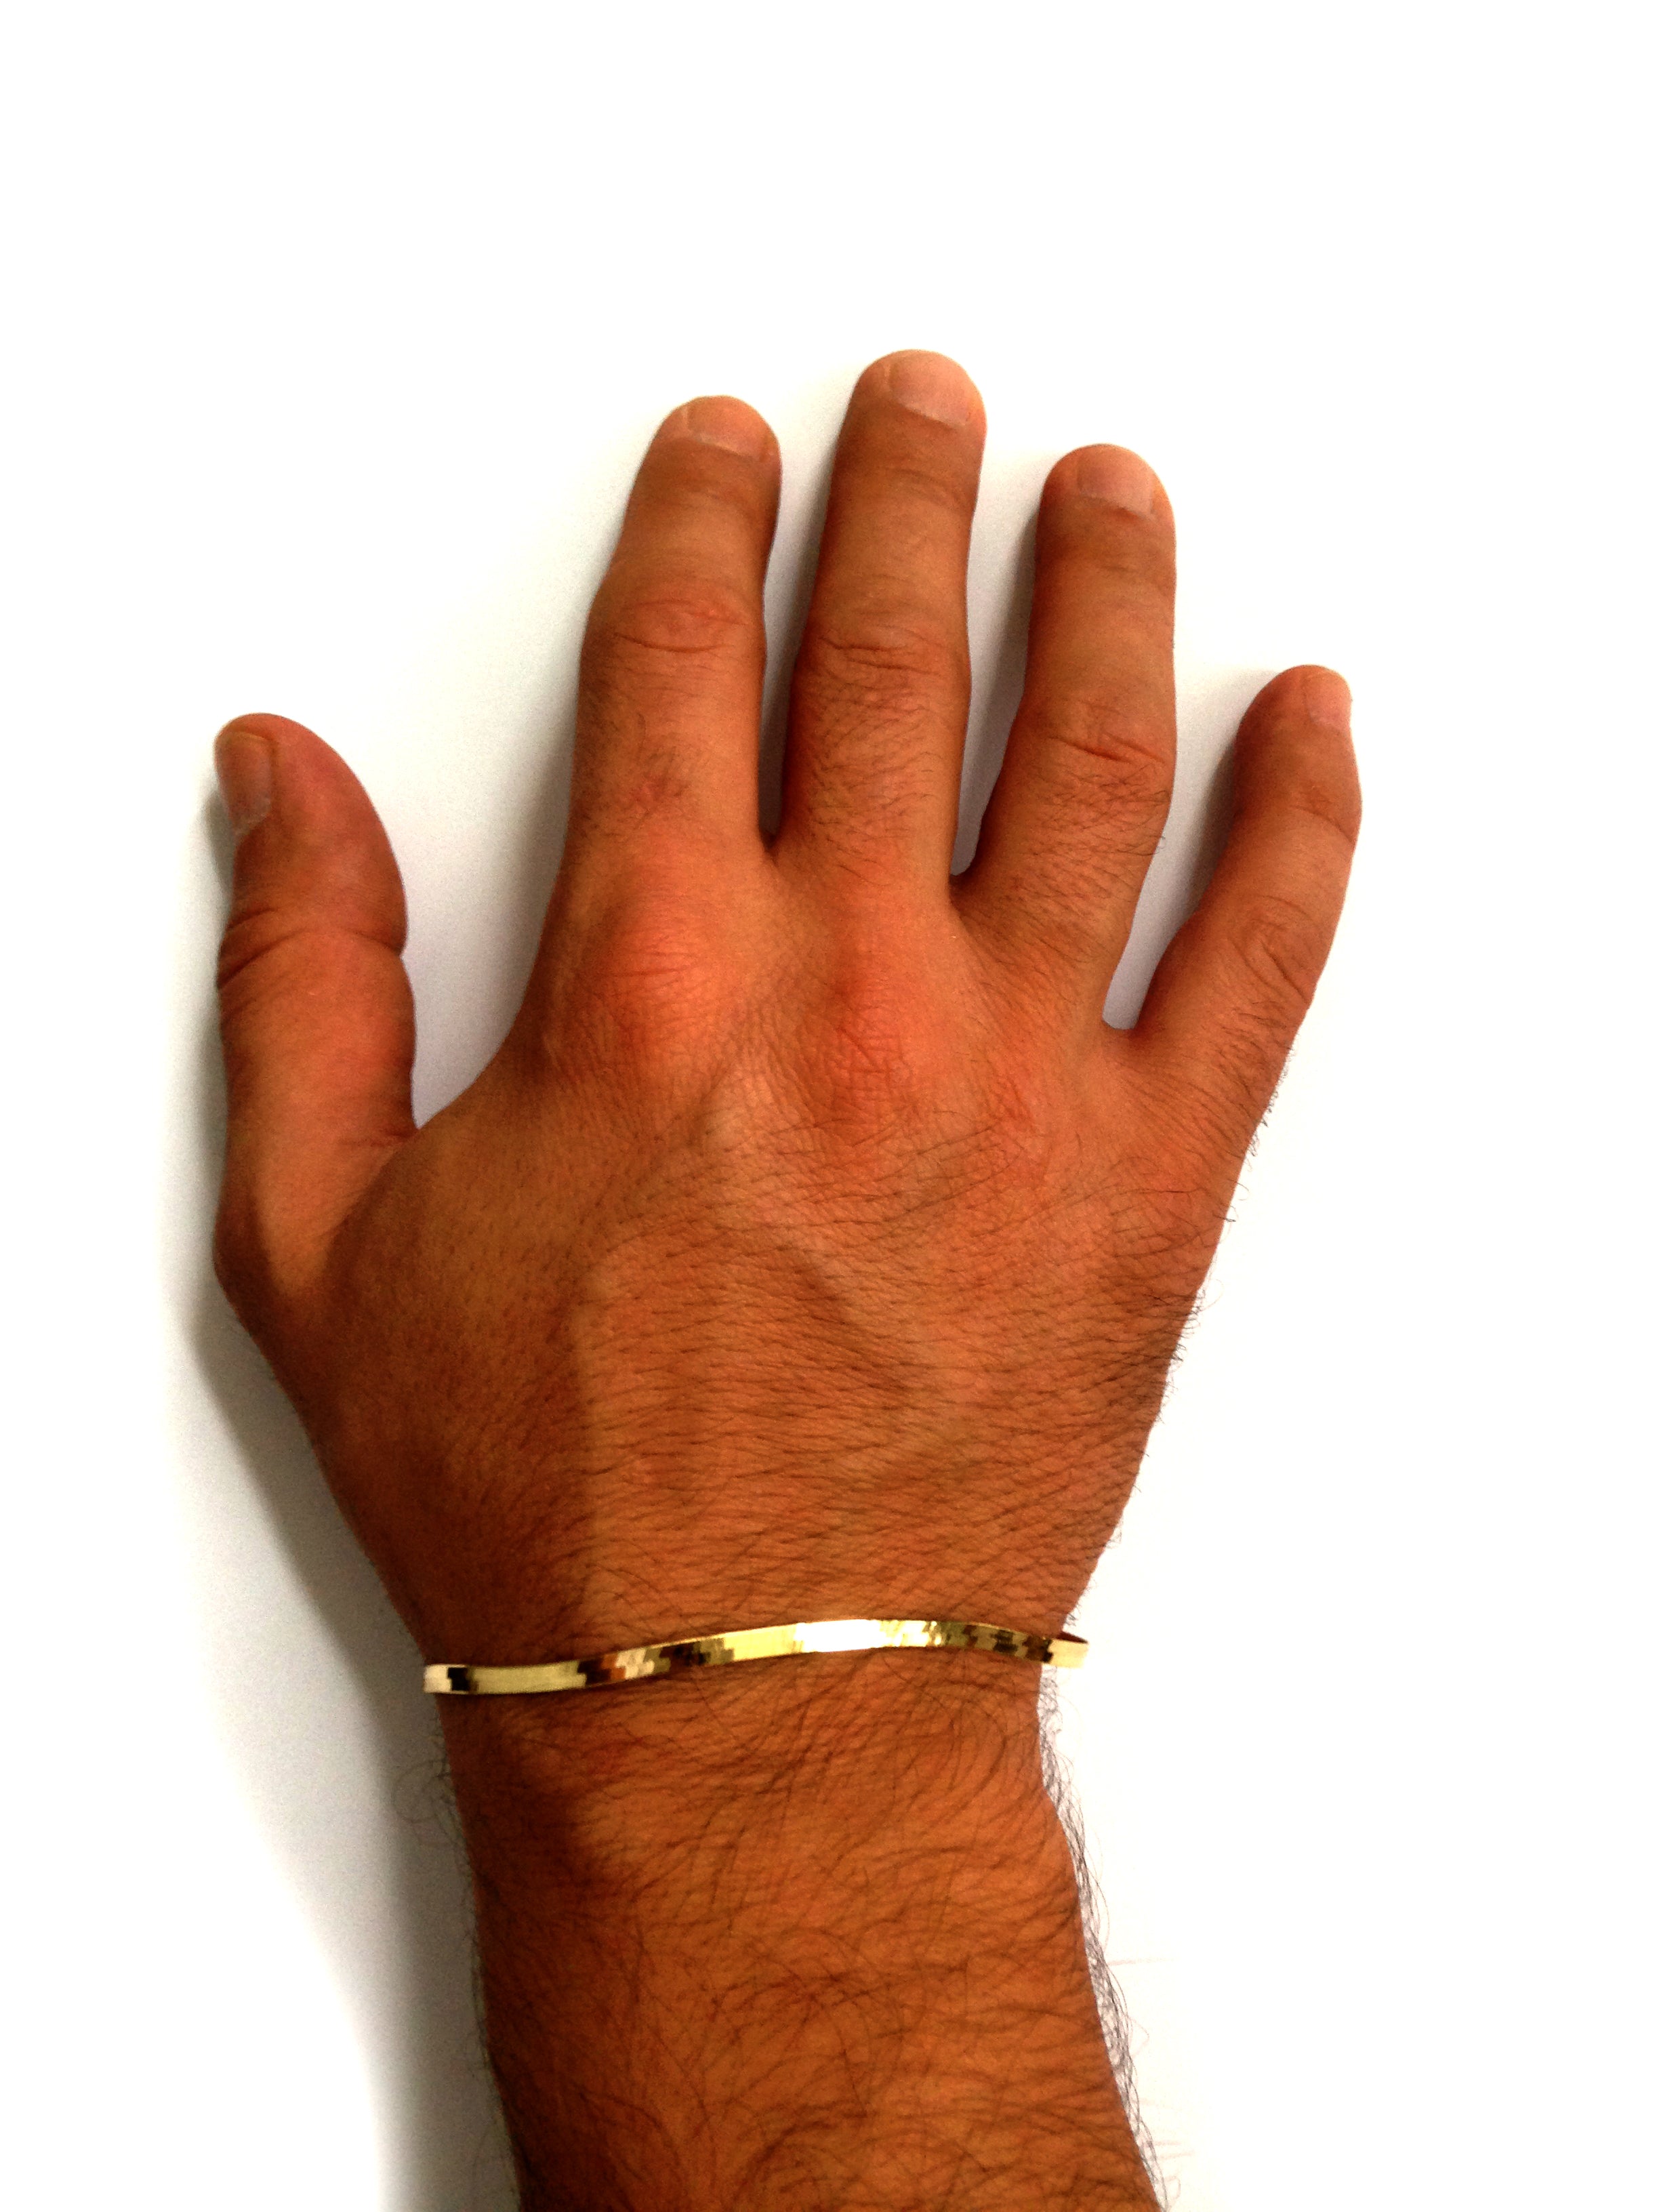 14k Yellow Solid Gold Imperial Herringbone Chain Bracelet, 3.0mm, 7" fine designer jewelry for men and women